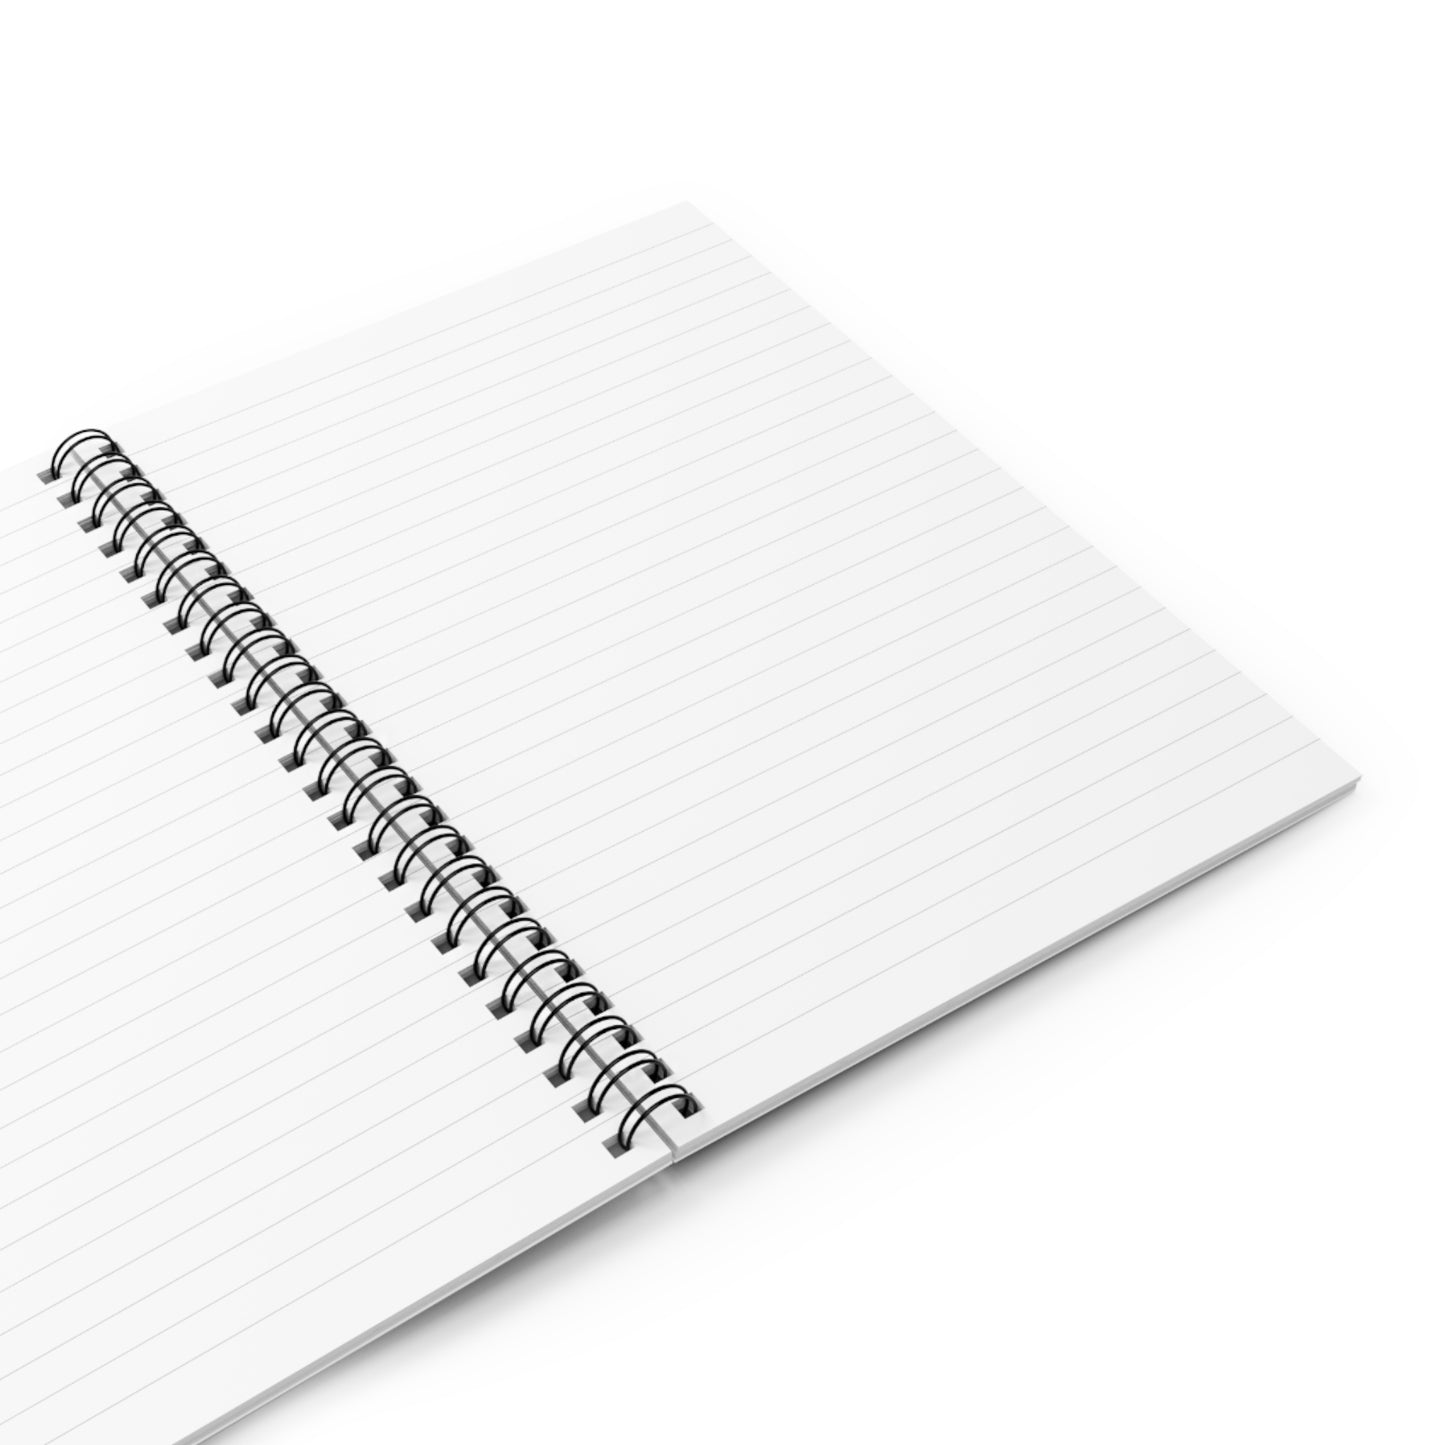 Team Jeus Spiral Notebook - Ruled Line